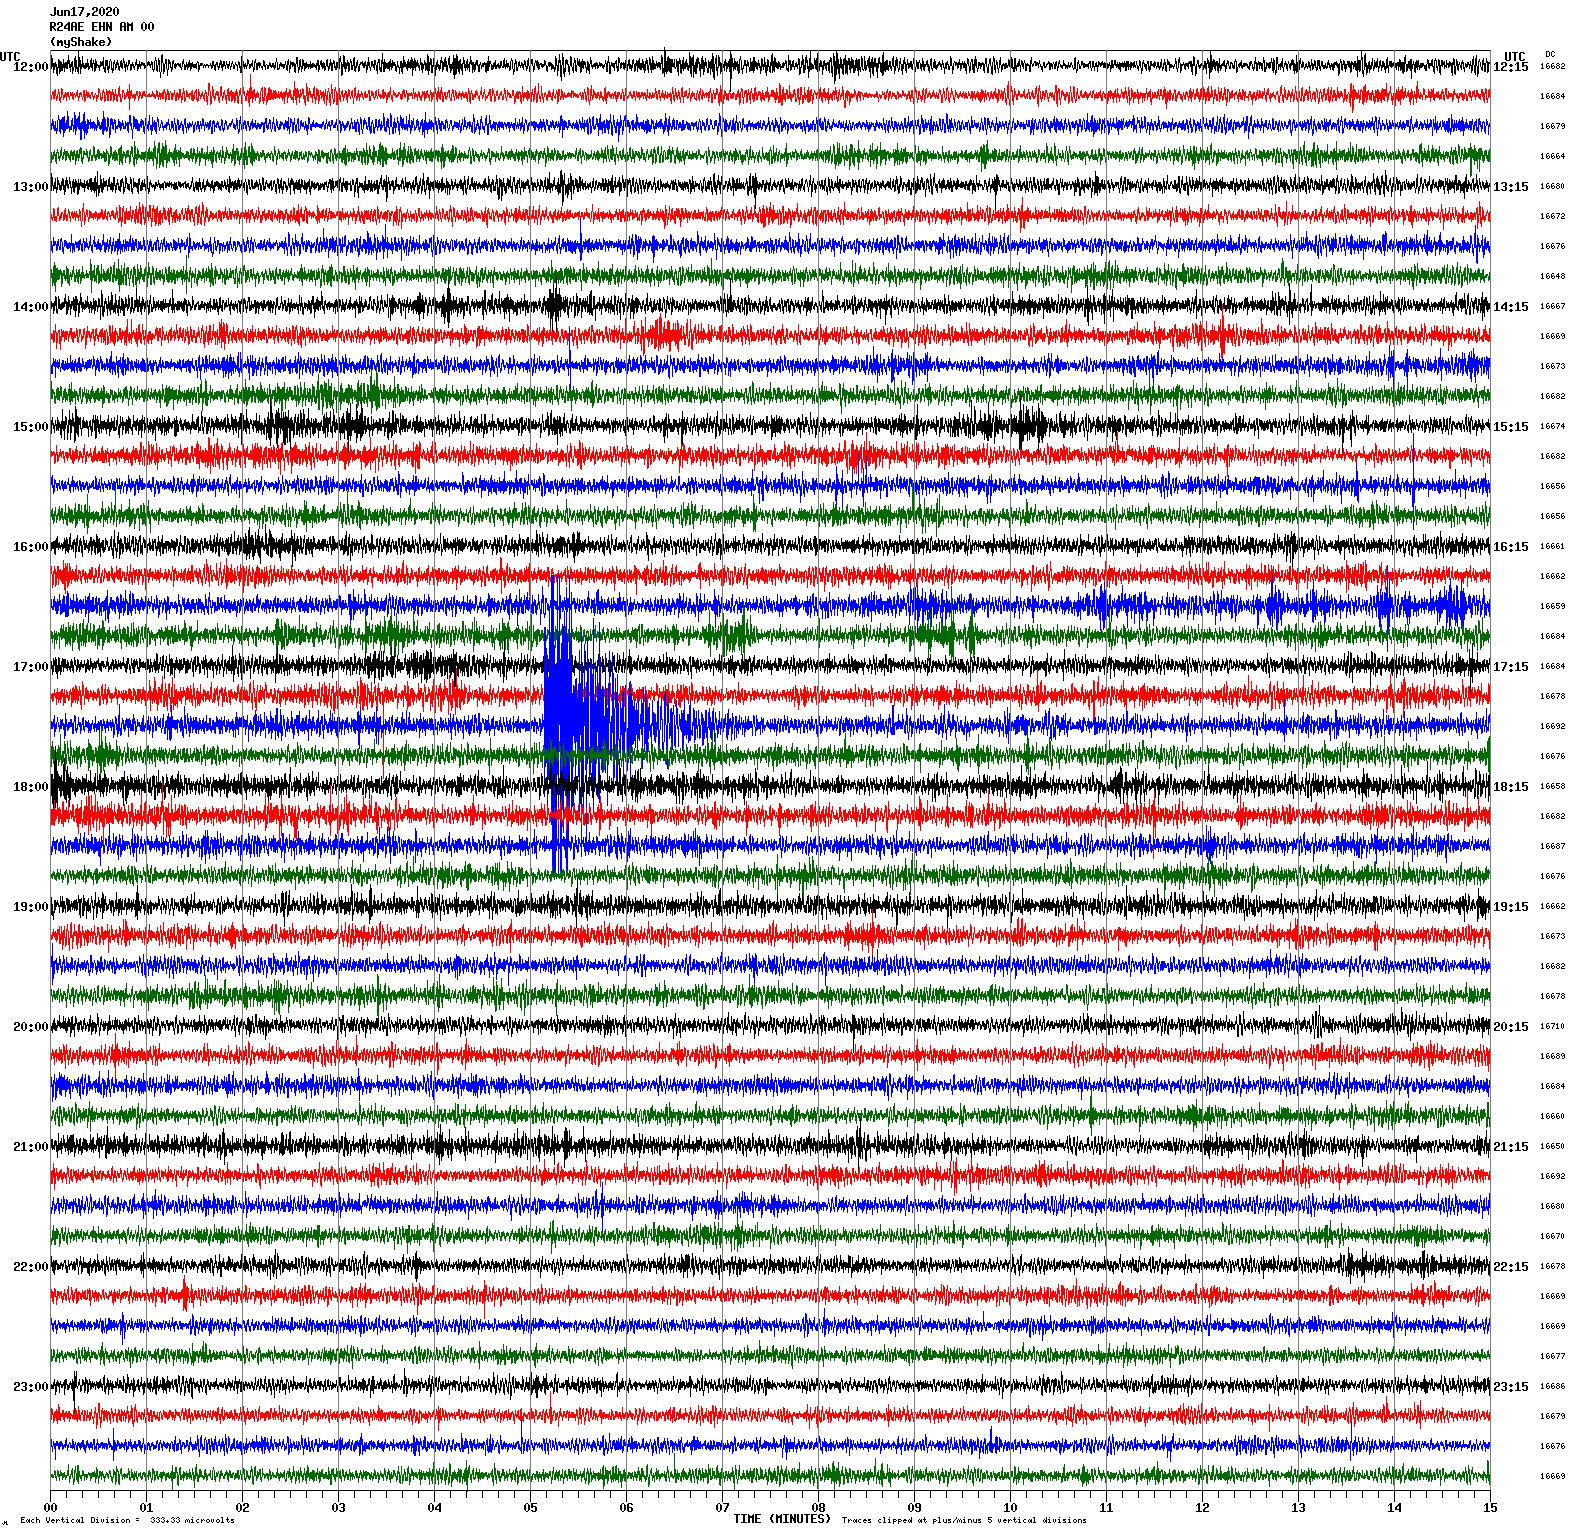 /seismic-data/R24AE/R24AE_EHN_AM_00.2020061712.gif